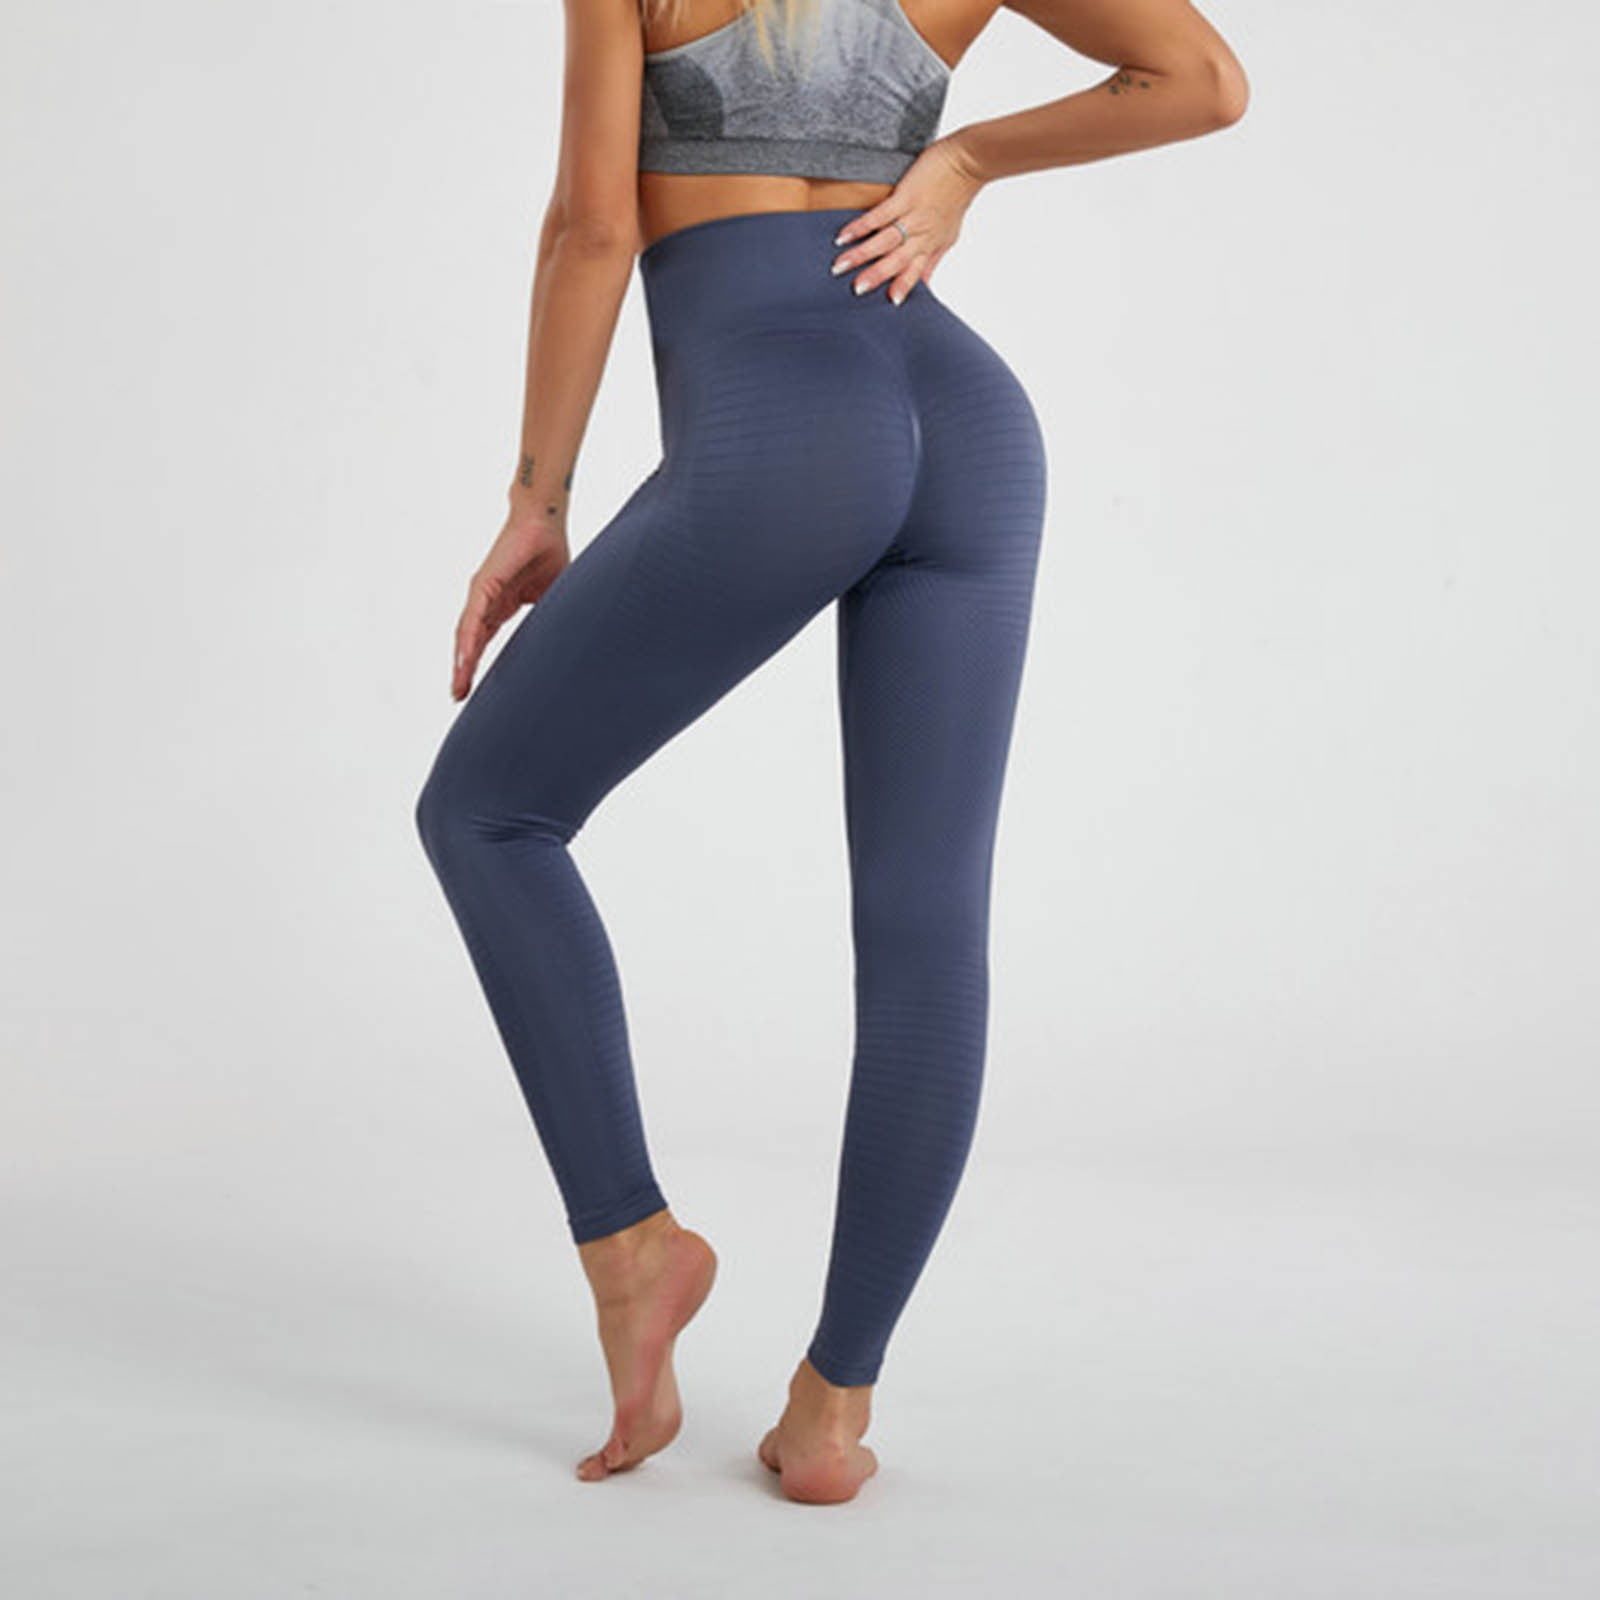 Women's High Waisted Yoga Leggings Workout Pants - Steel Blue / S